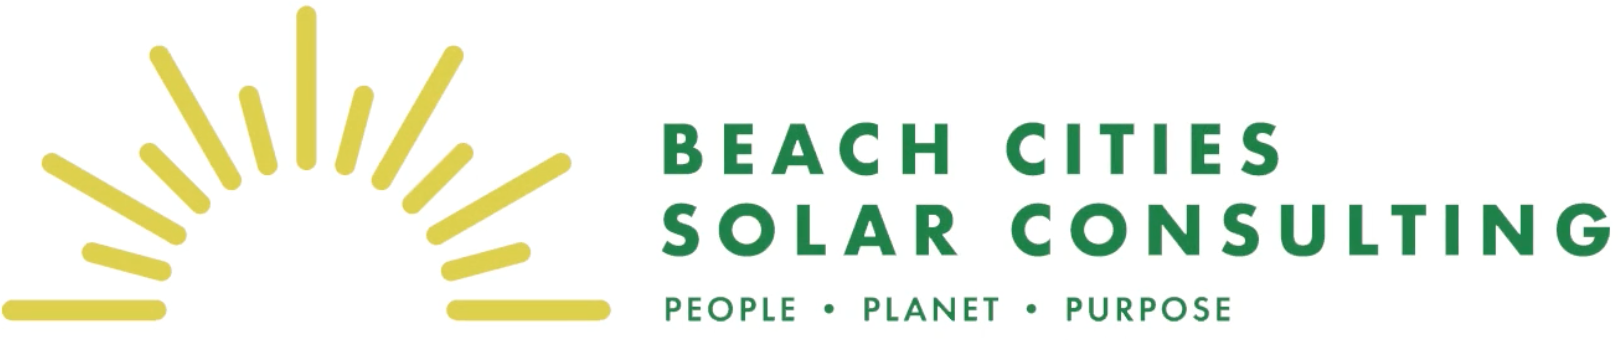 Beach Cities Solar Consulting